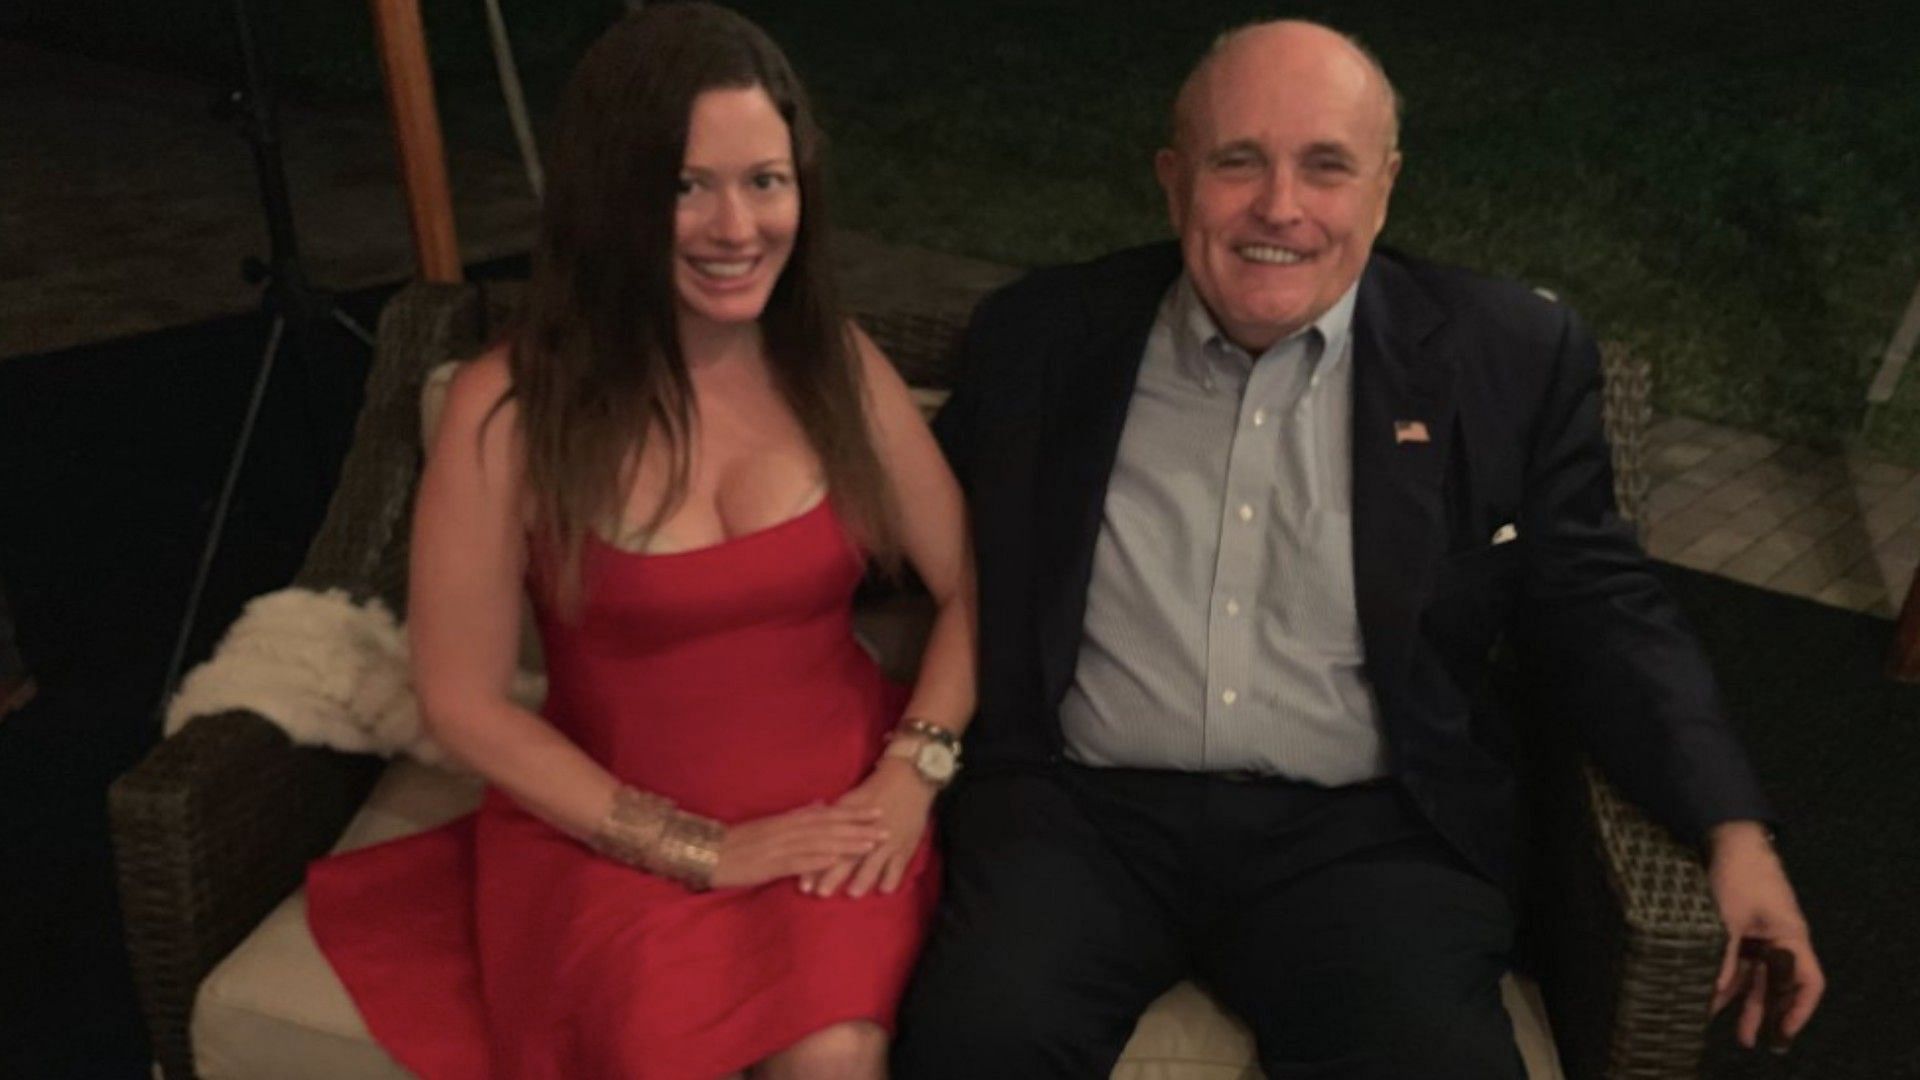 Noelle Dunphy and Rudy Giuliani (Image via Occupy Democrats/Twitter)